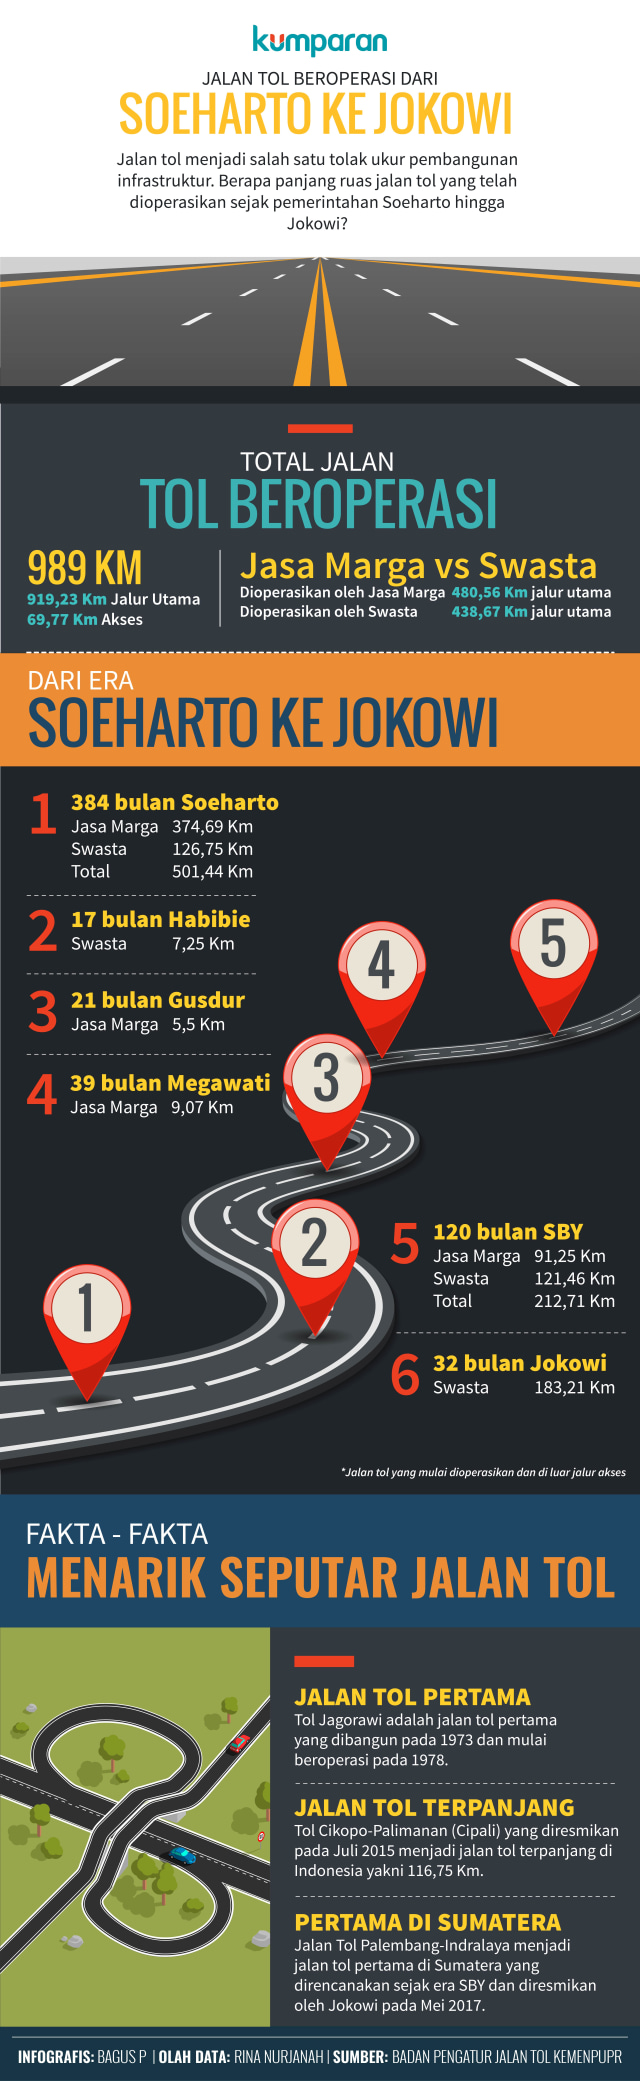 Infografis Jalan Tol dari Soeharto ke Jokowi (Foto: Bagus Permadi/kumparan)